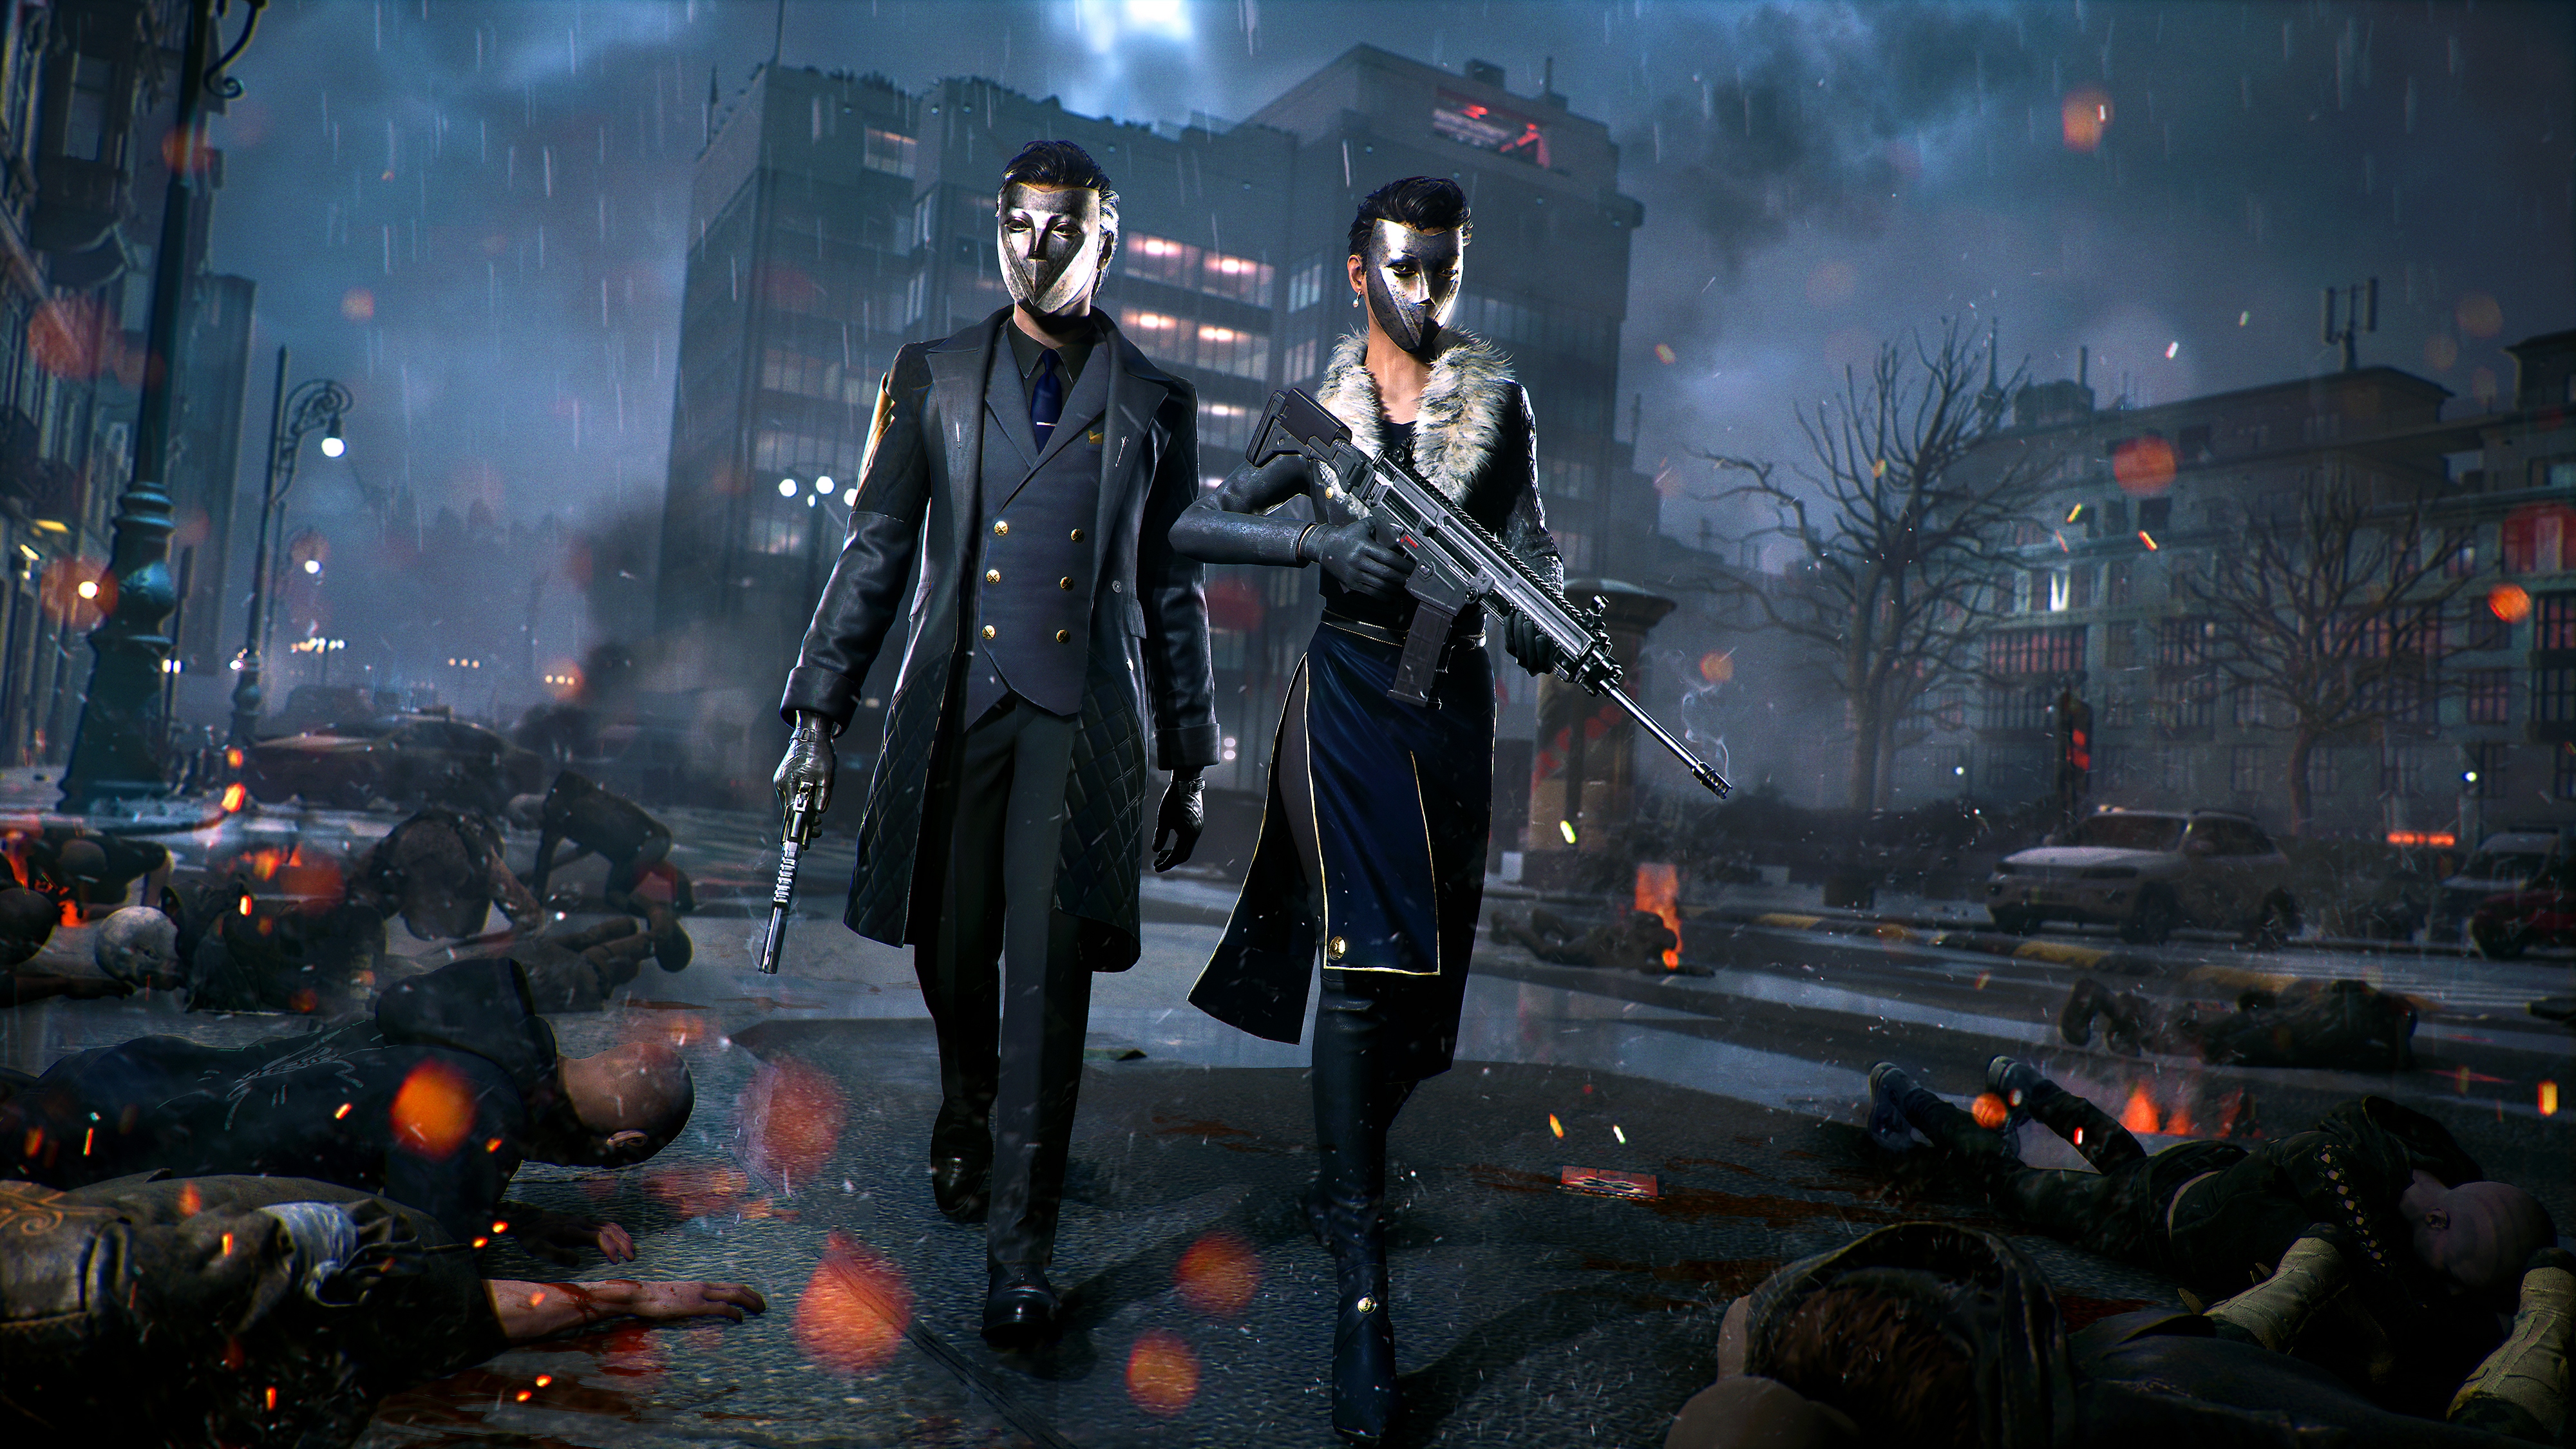 Vampire the Masquerade – Bloodhunt – зняток екрану, на якому зображений персонаж нового архетипу – миротворець